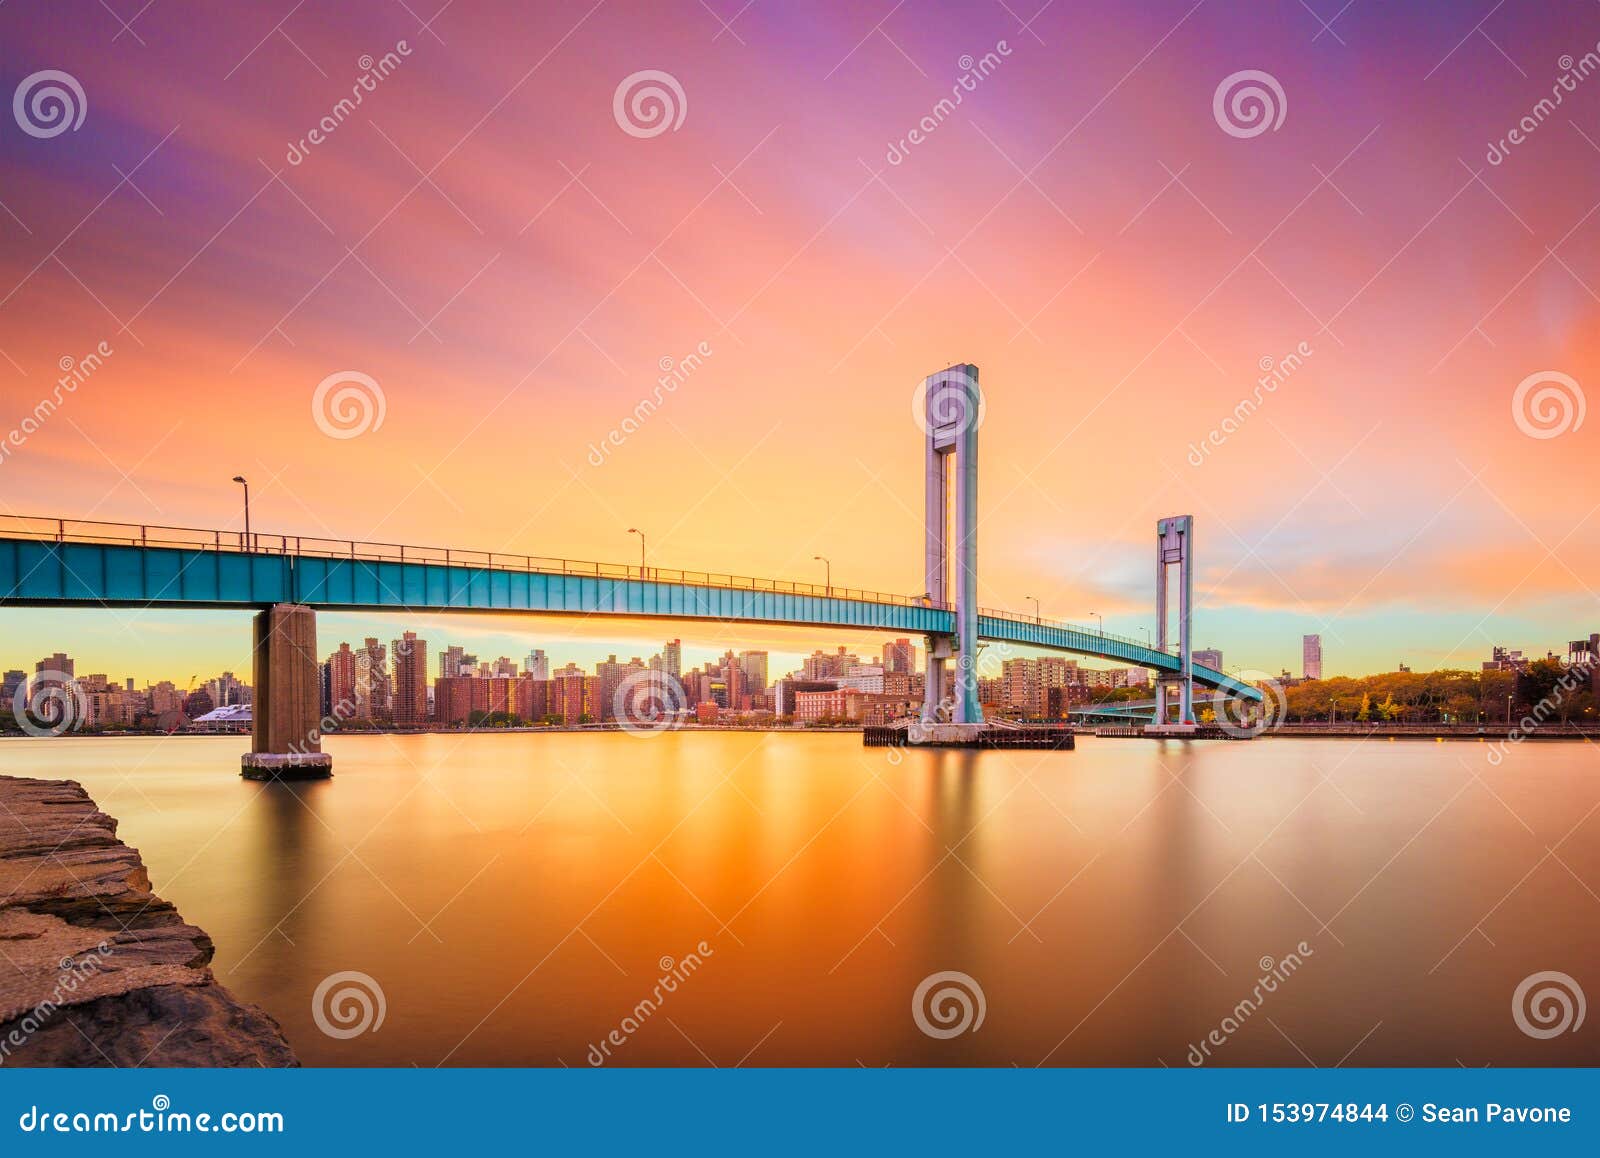 wards island bridge, new york city